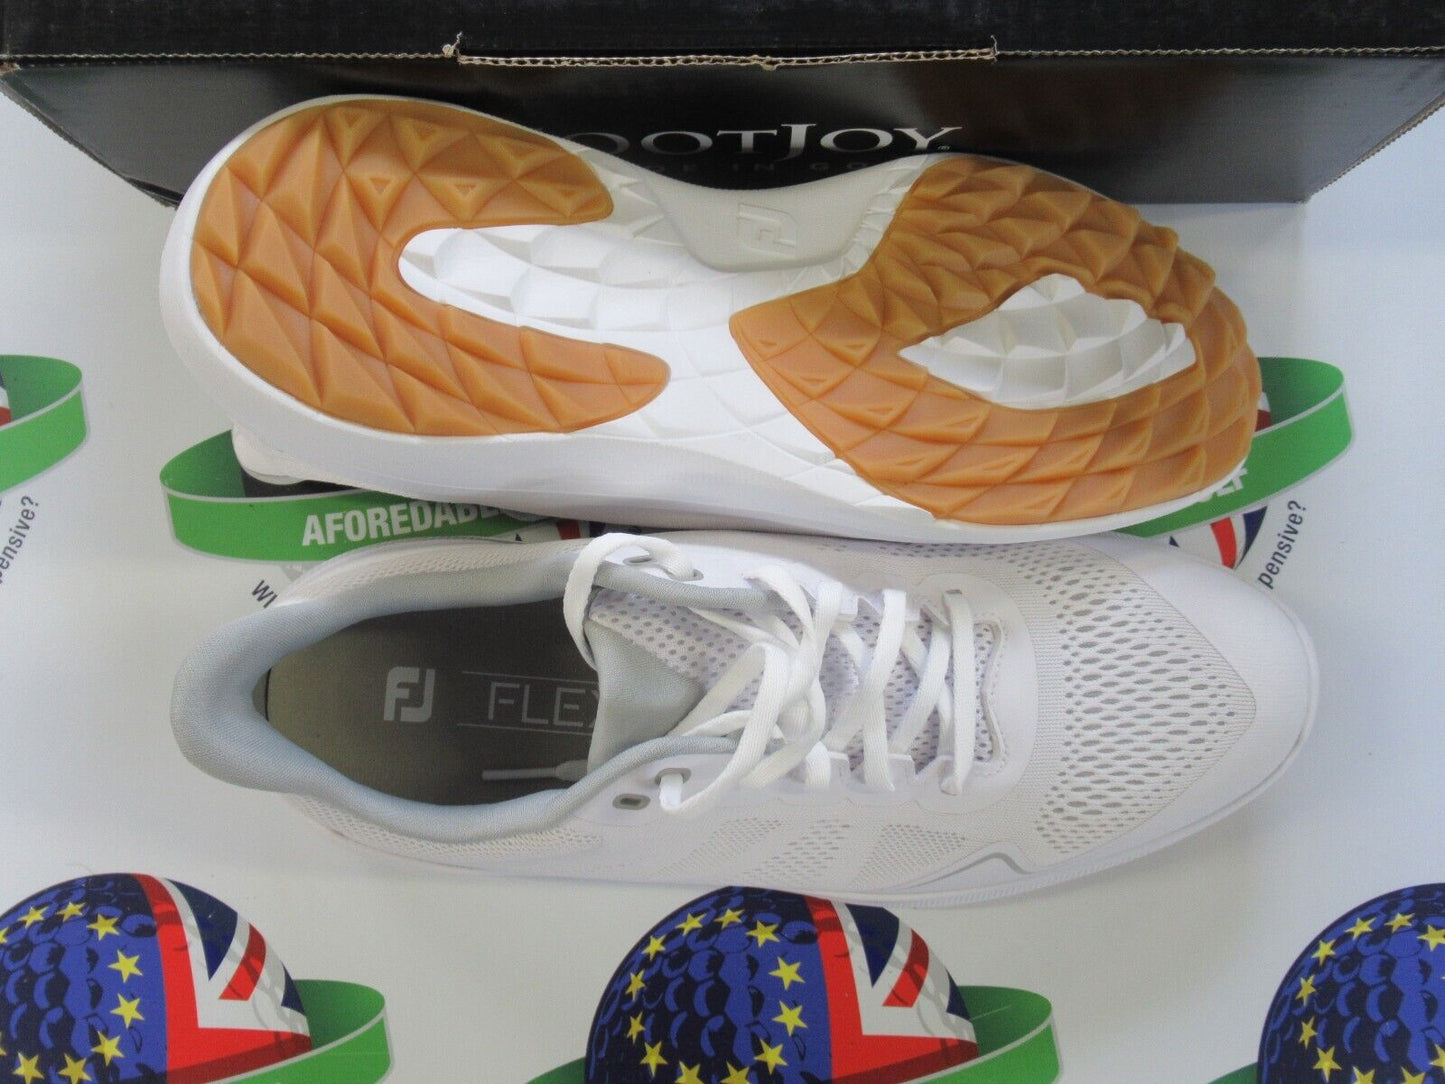 footjoy flex golf shoes 56139k white uk size 9.5 medium